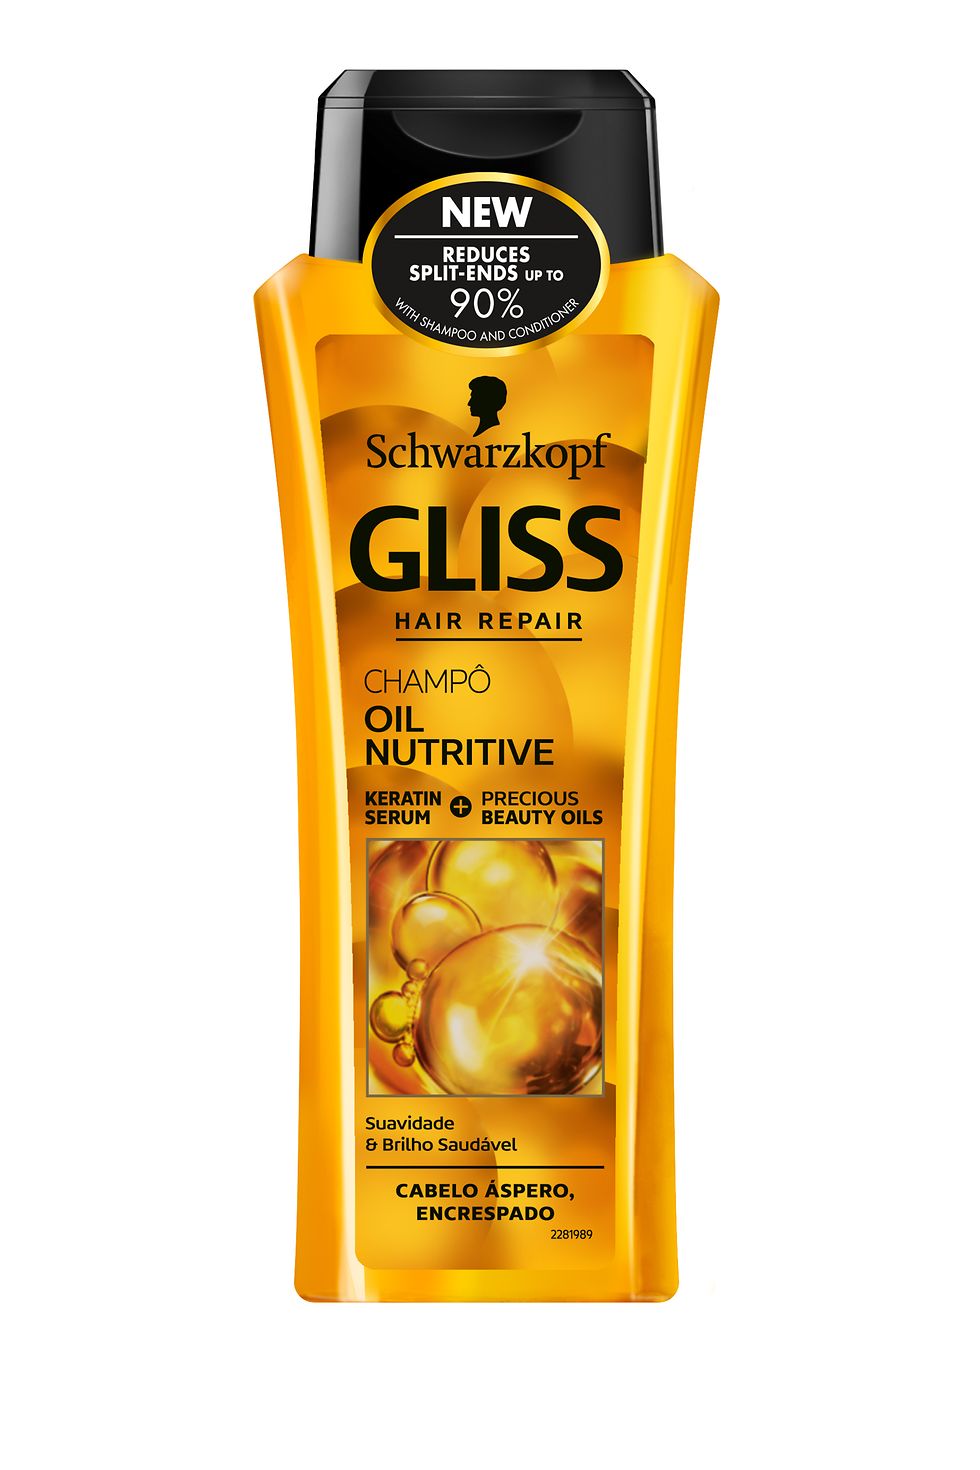 GLISS OIL NUTRITIVE Champô 200ml